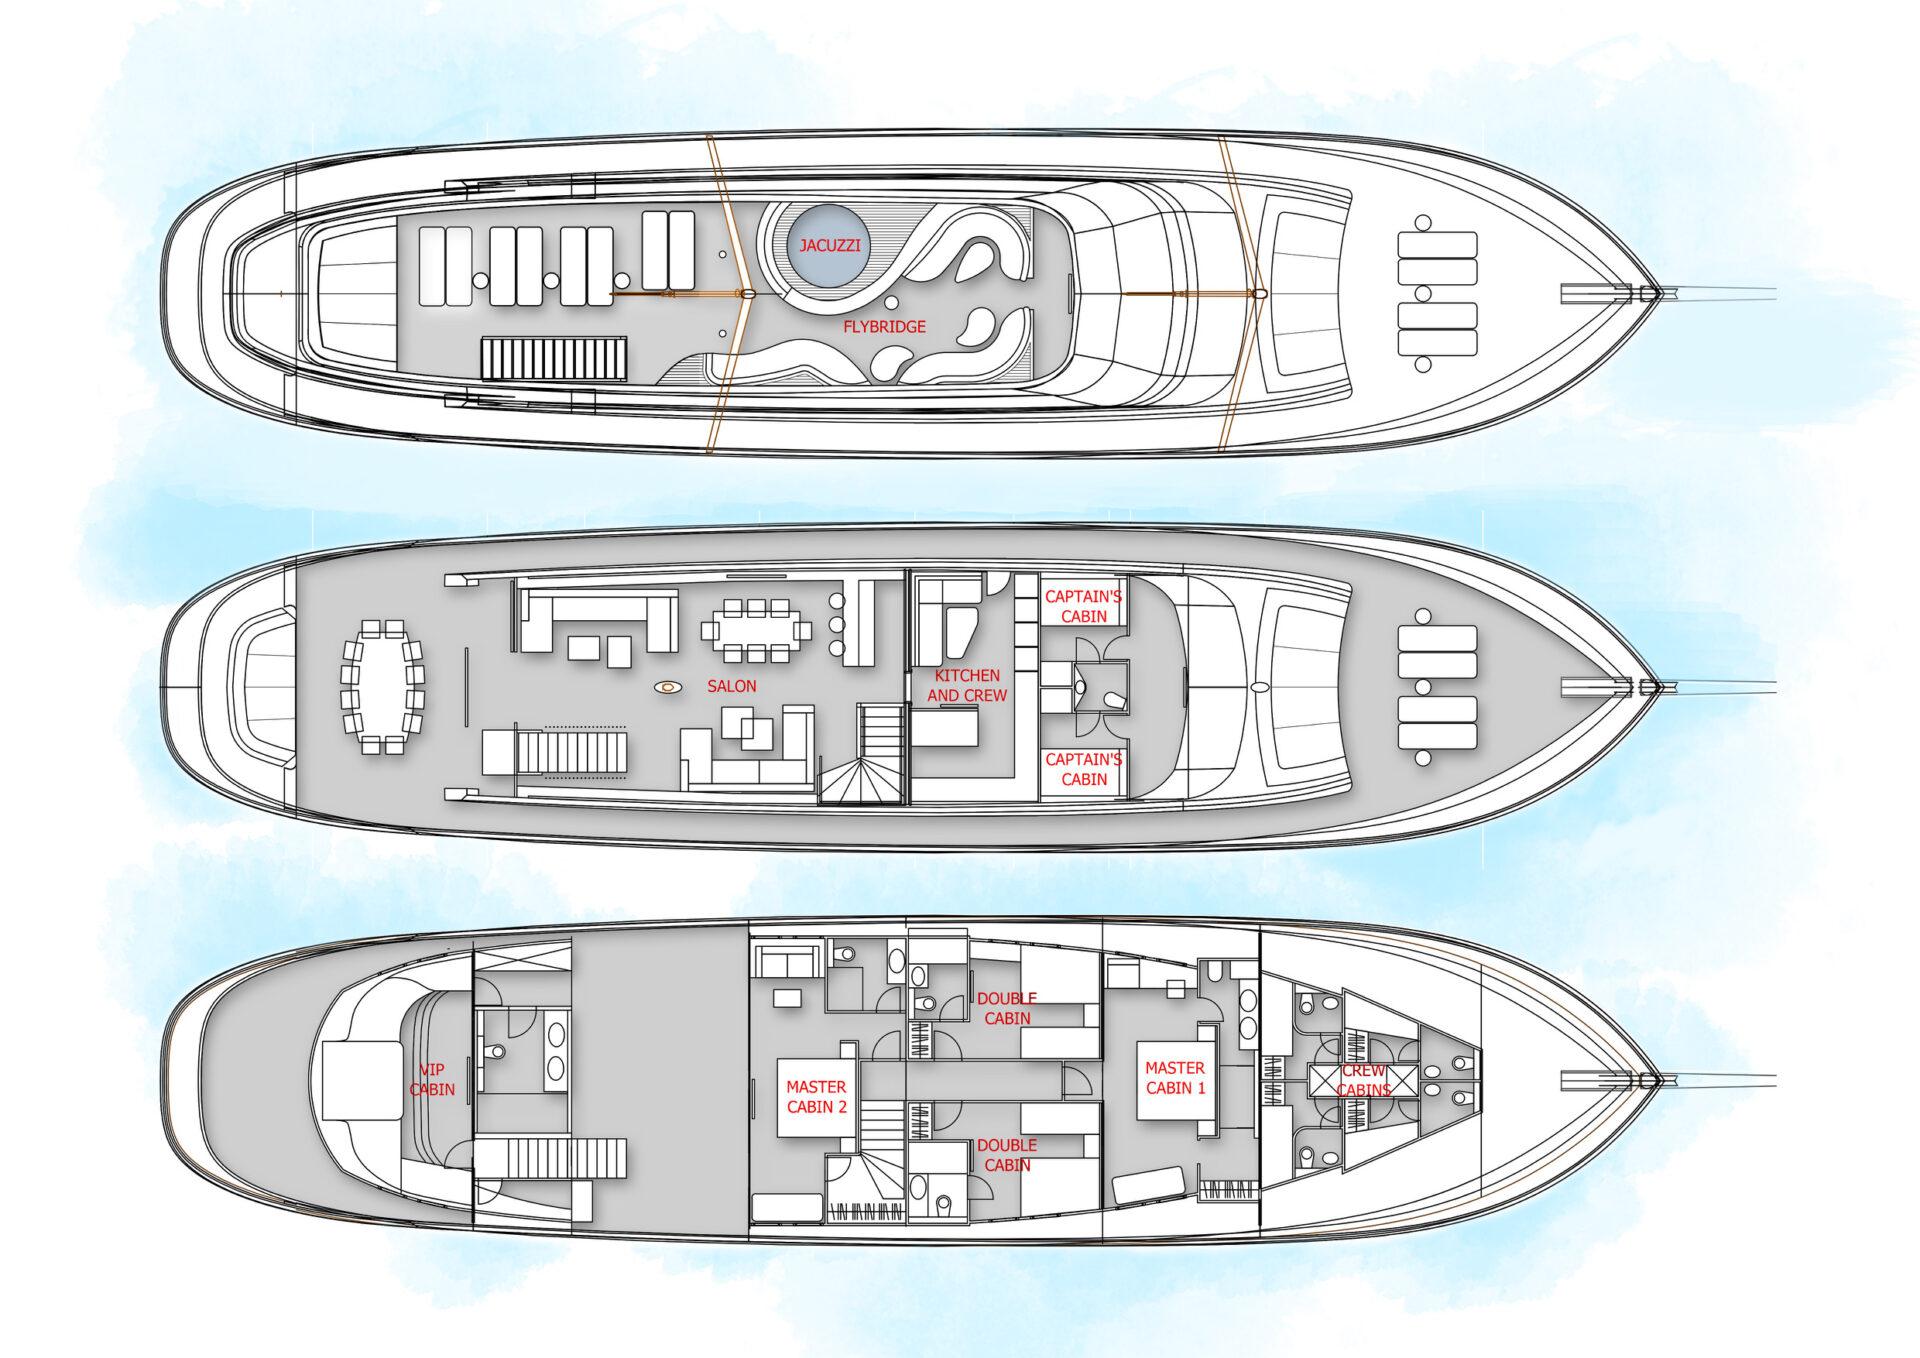 Super Yacht Acapella modern charter in Croatia Deck Plan - High Point Yachting